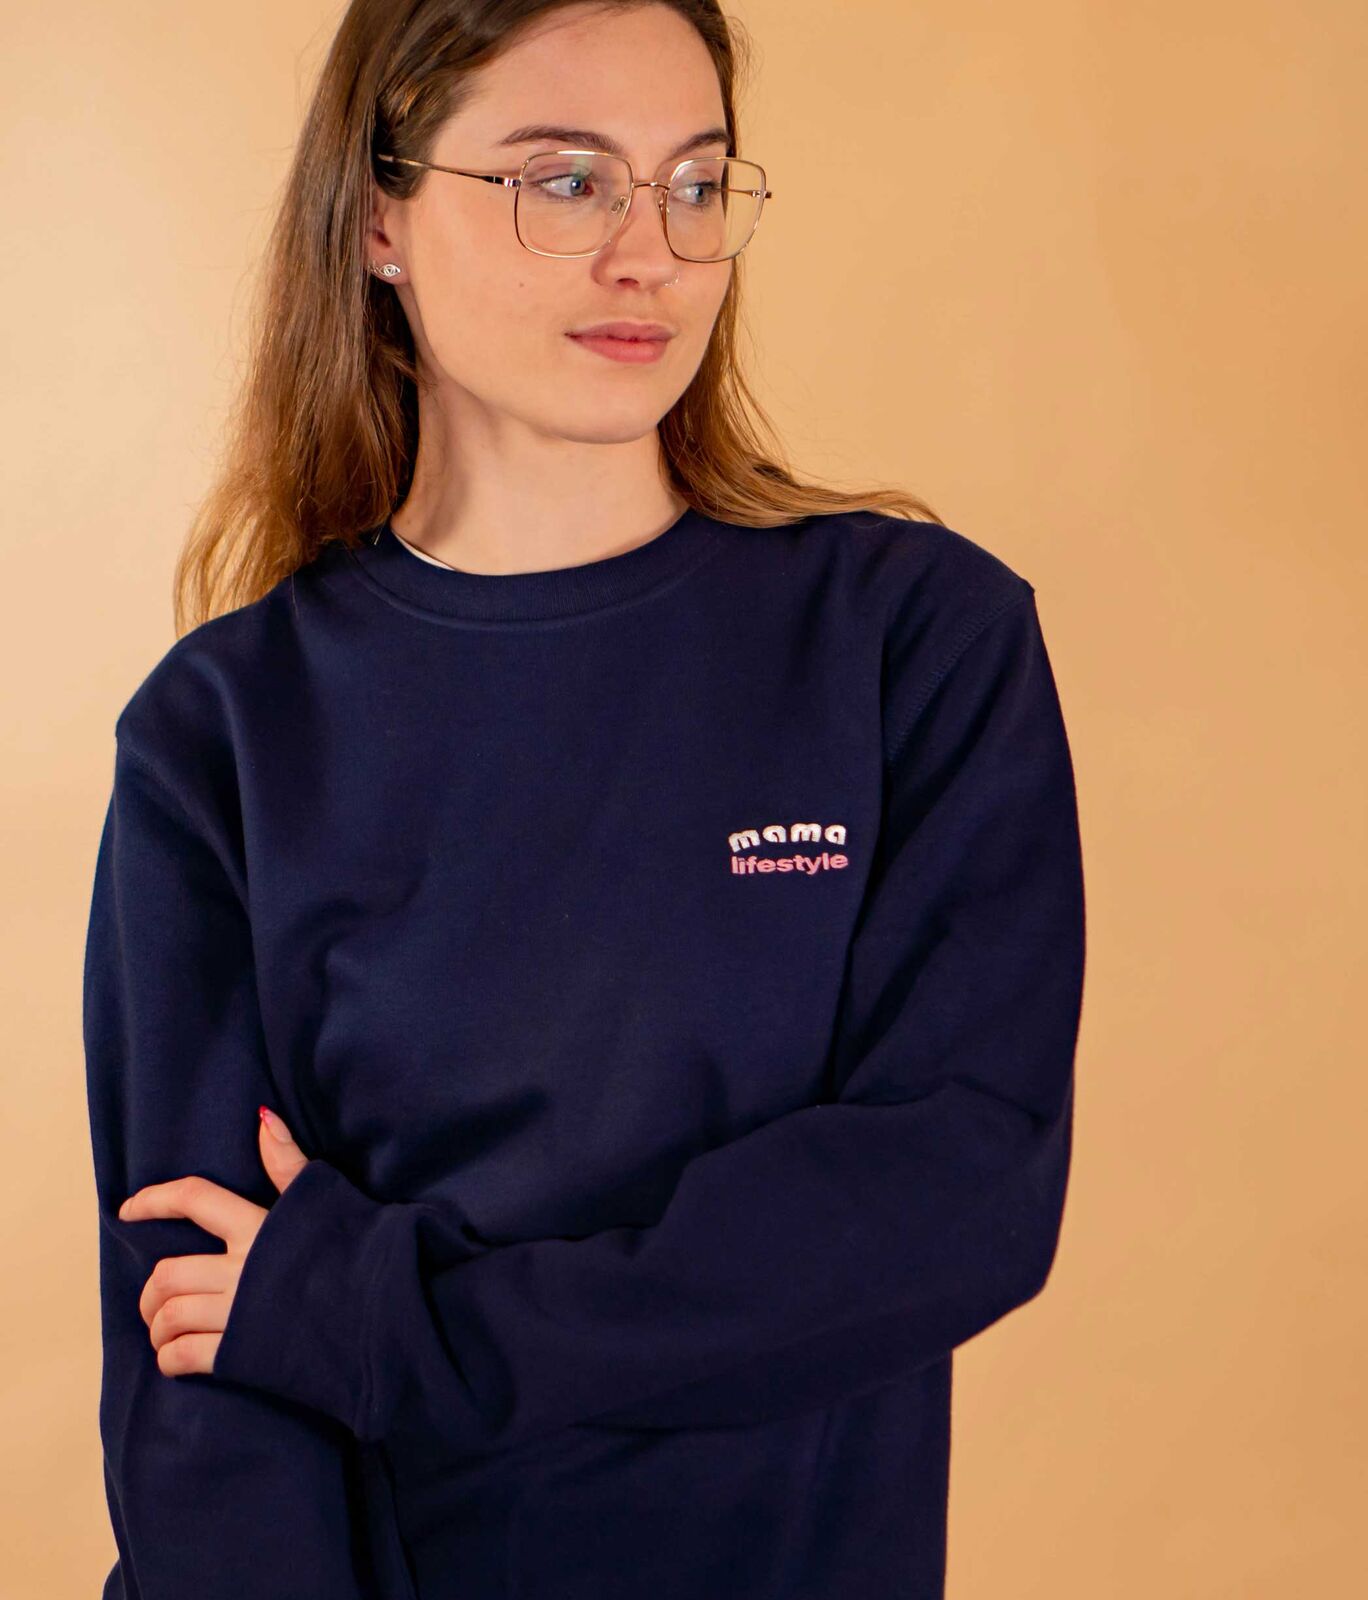 'Capable of Anything' Mama Lifestyle Sweatshirt